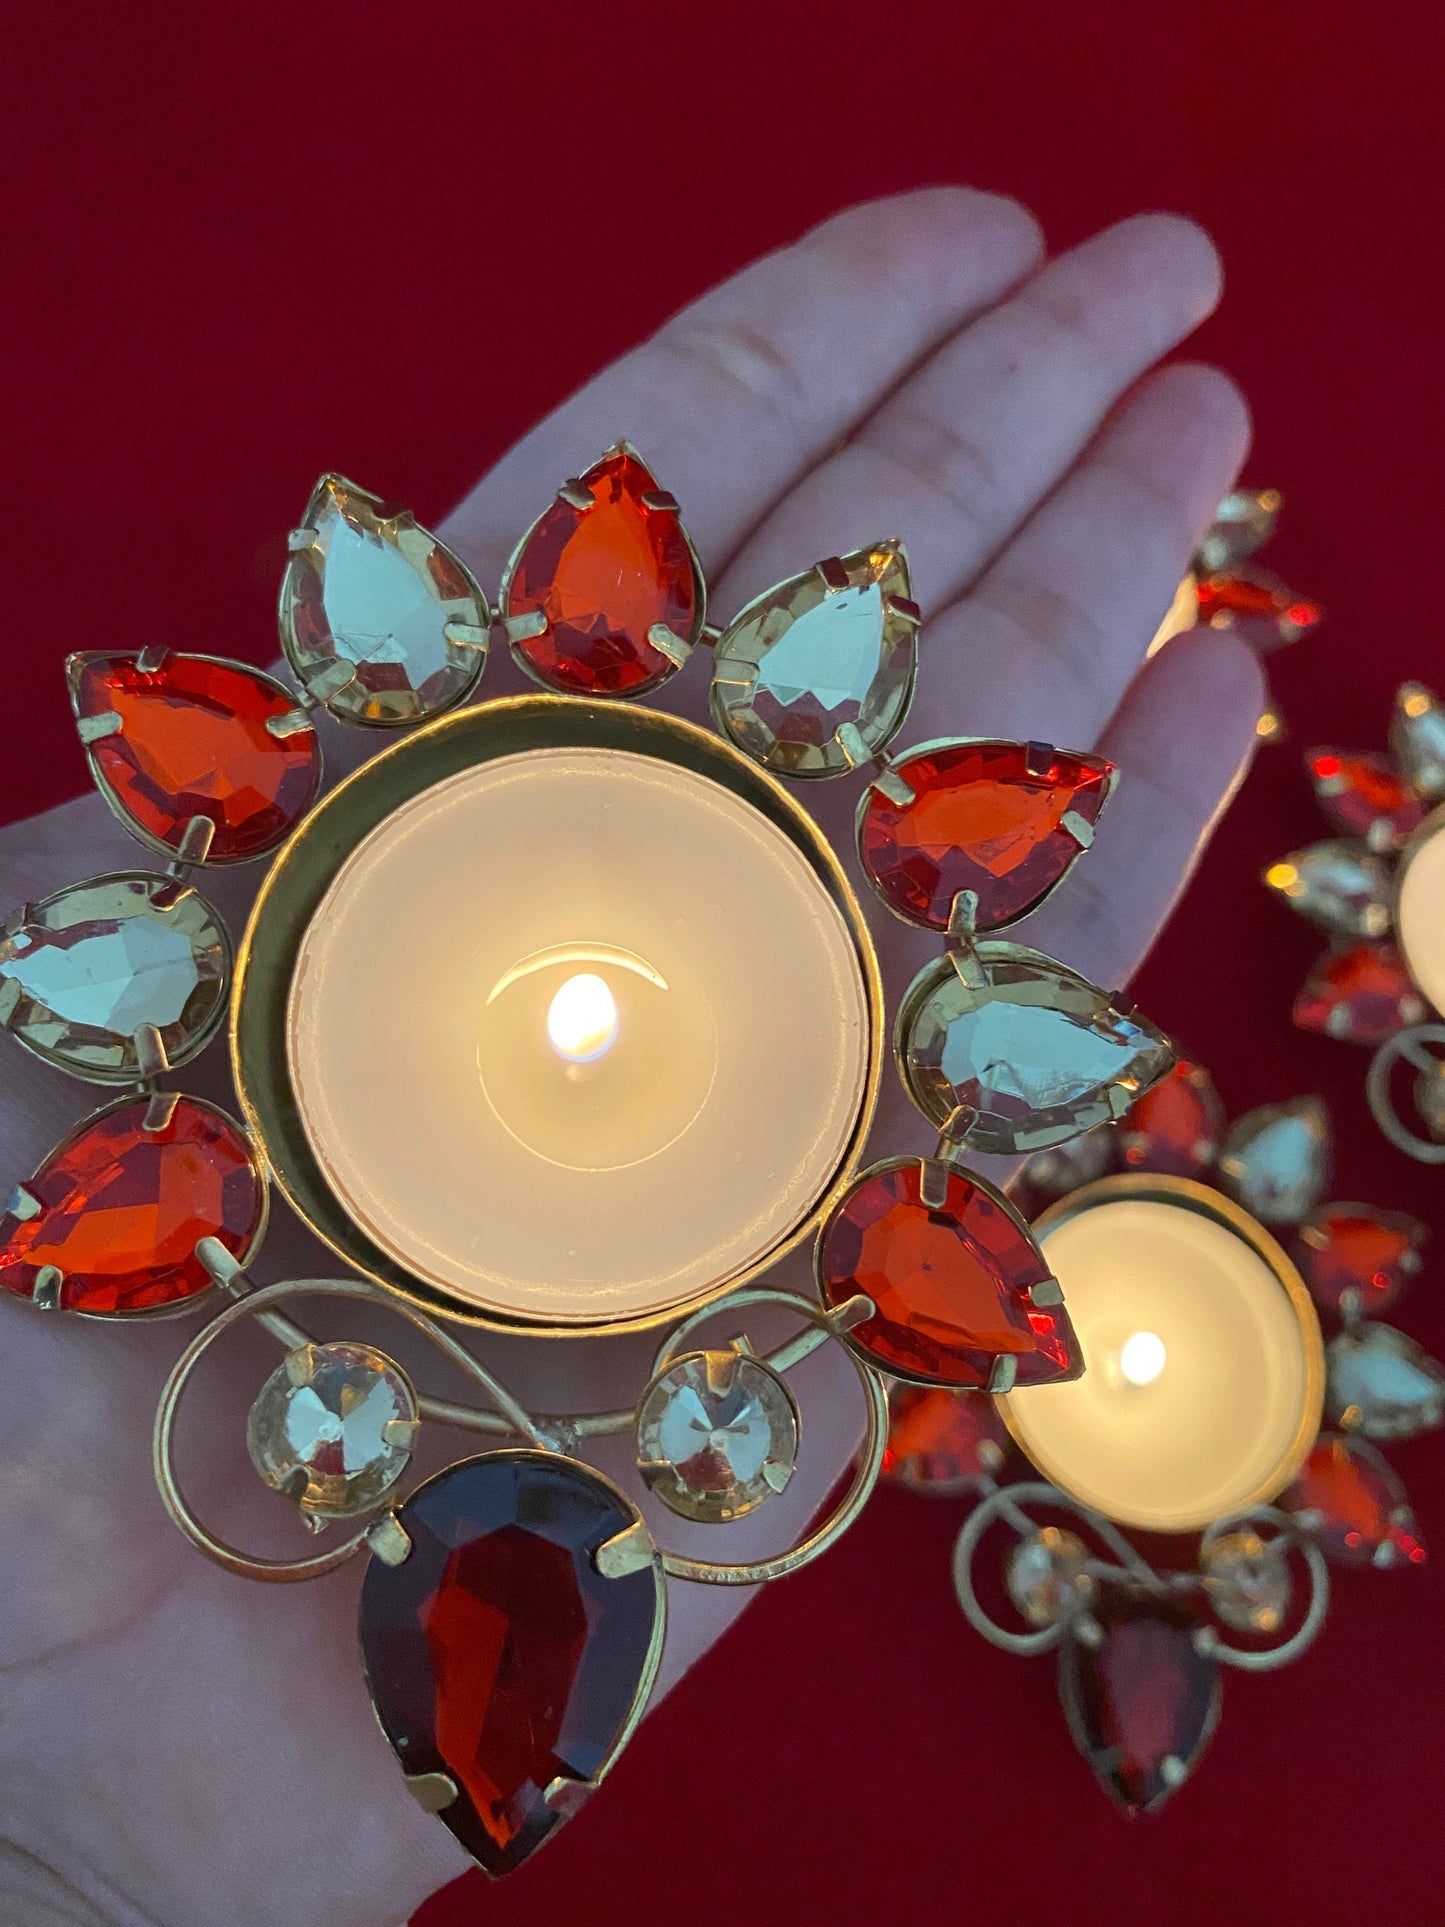 Letter Box Gifts 2 Diwali Tea light Candle Holders Metal Diyas for Diwali, Christmas, Gifting, Home Decor for Decorating Mehendi Thaal